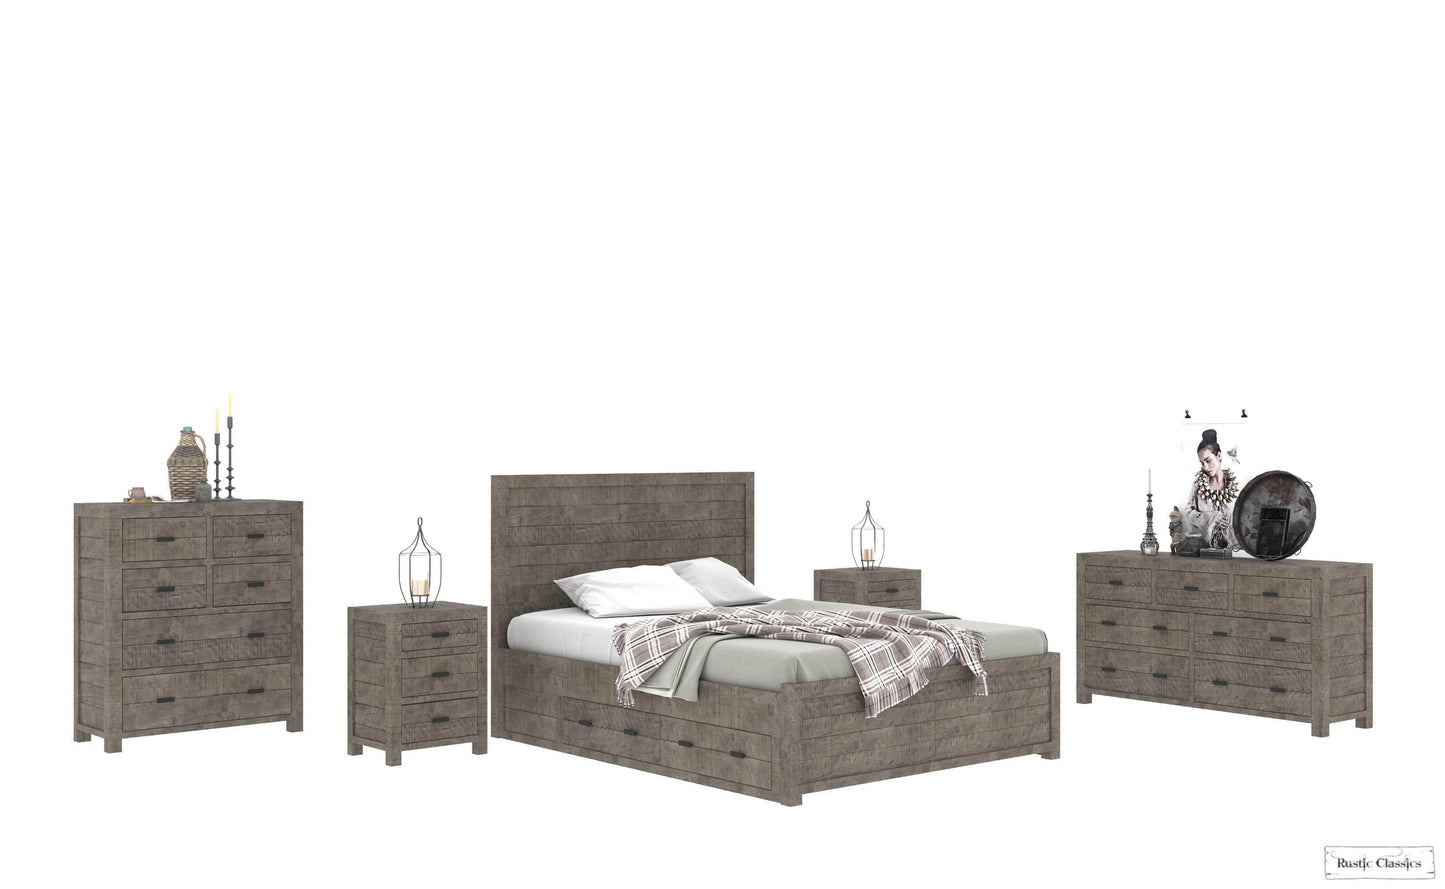 Rustic Classics Bedroom Set Queen Whistler 5 Piece Reclaimed Wood Storage Platform Bedroom Furniture Set in Grey – Available in 2 Sizes